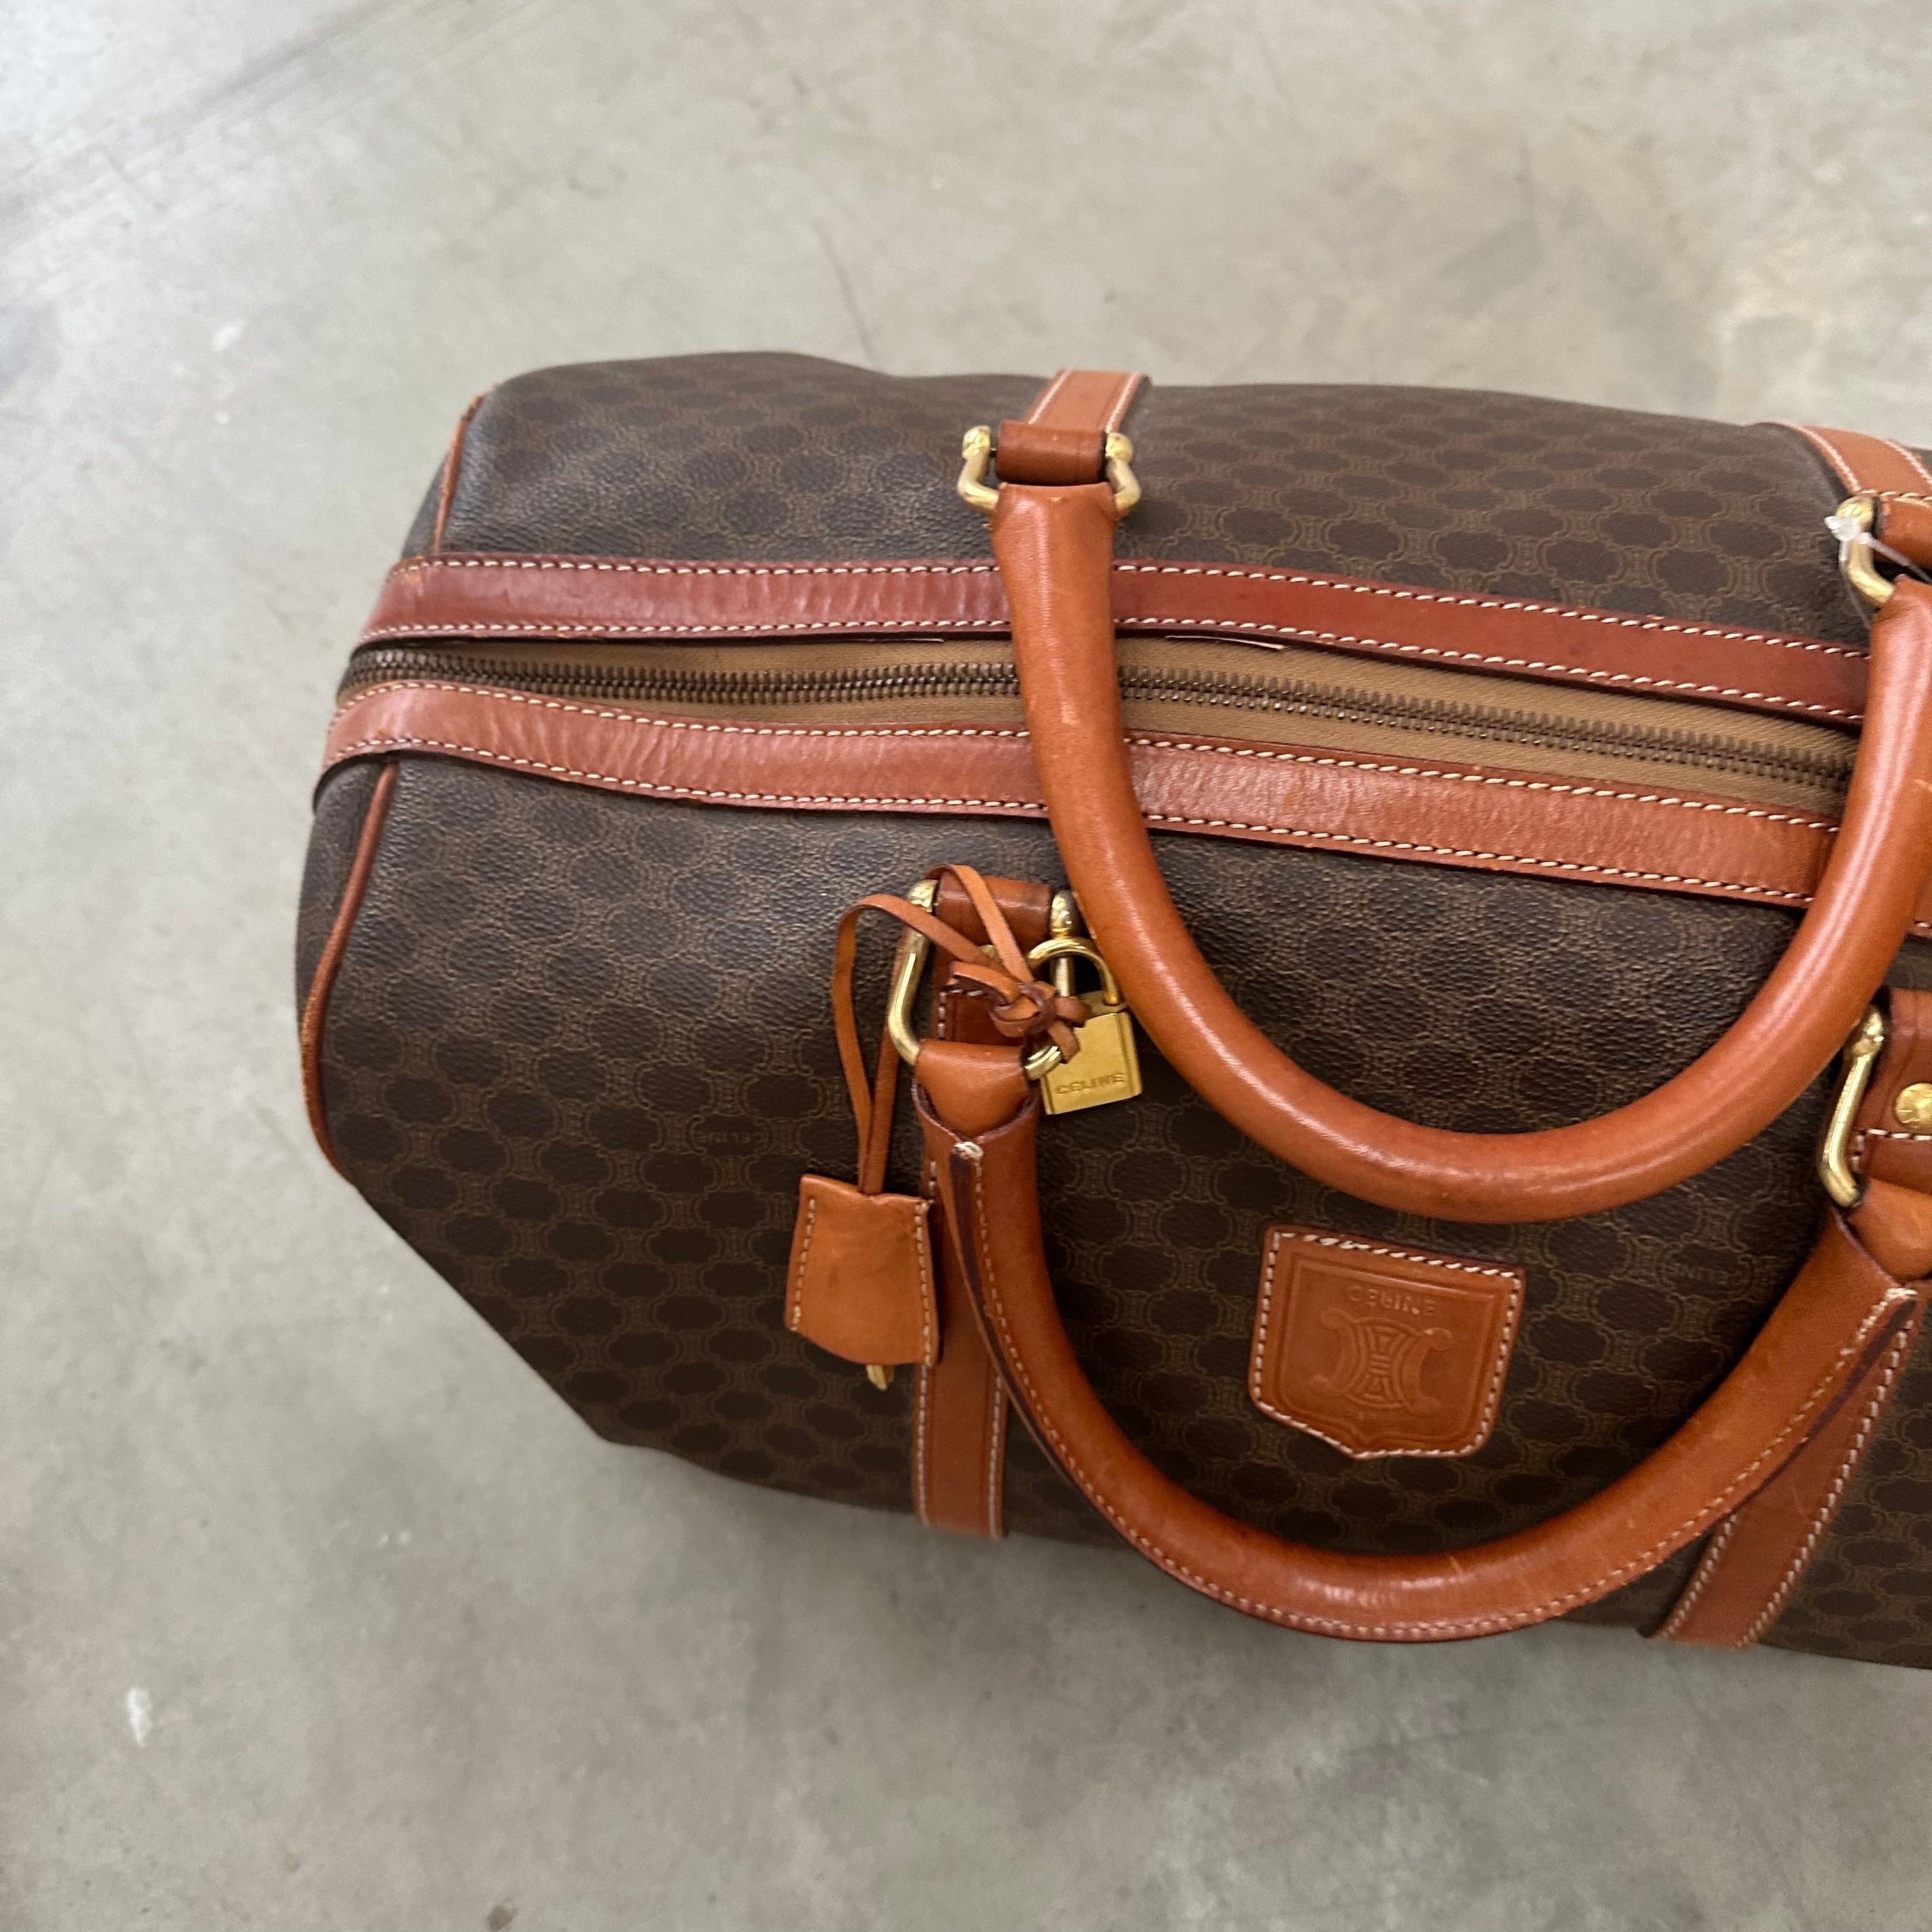 Celine Macadam Travel Boston Bag with Key